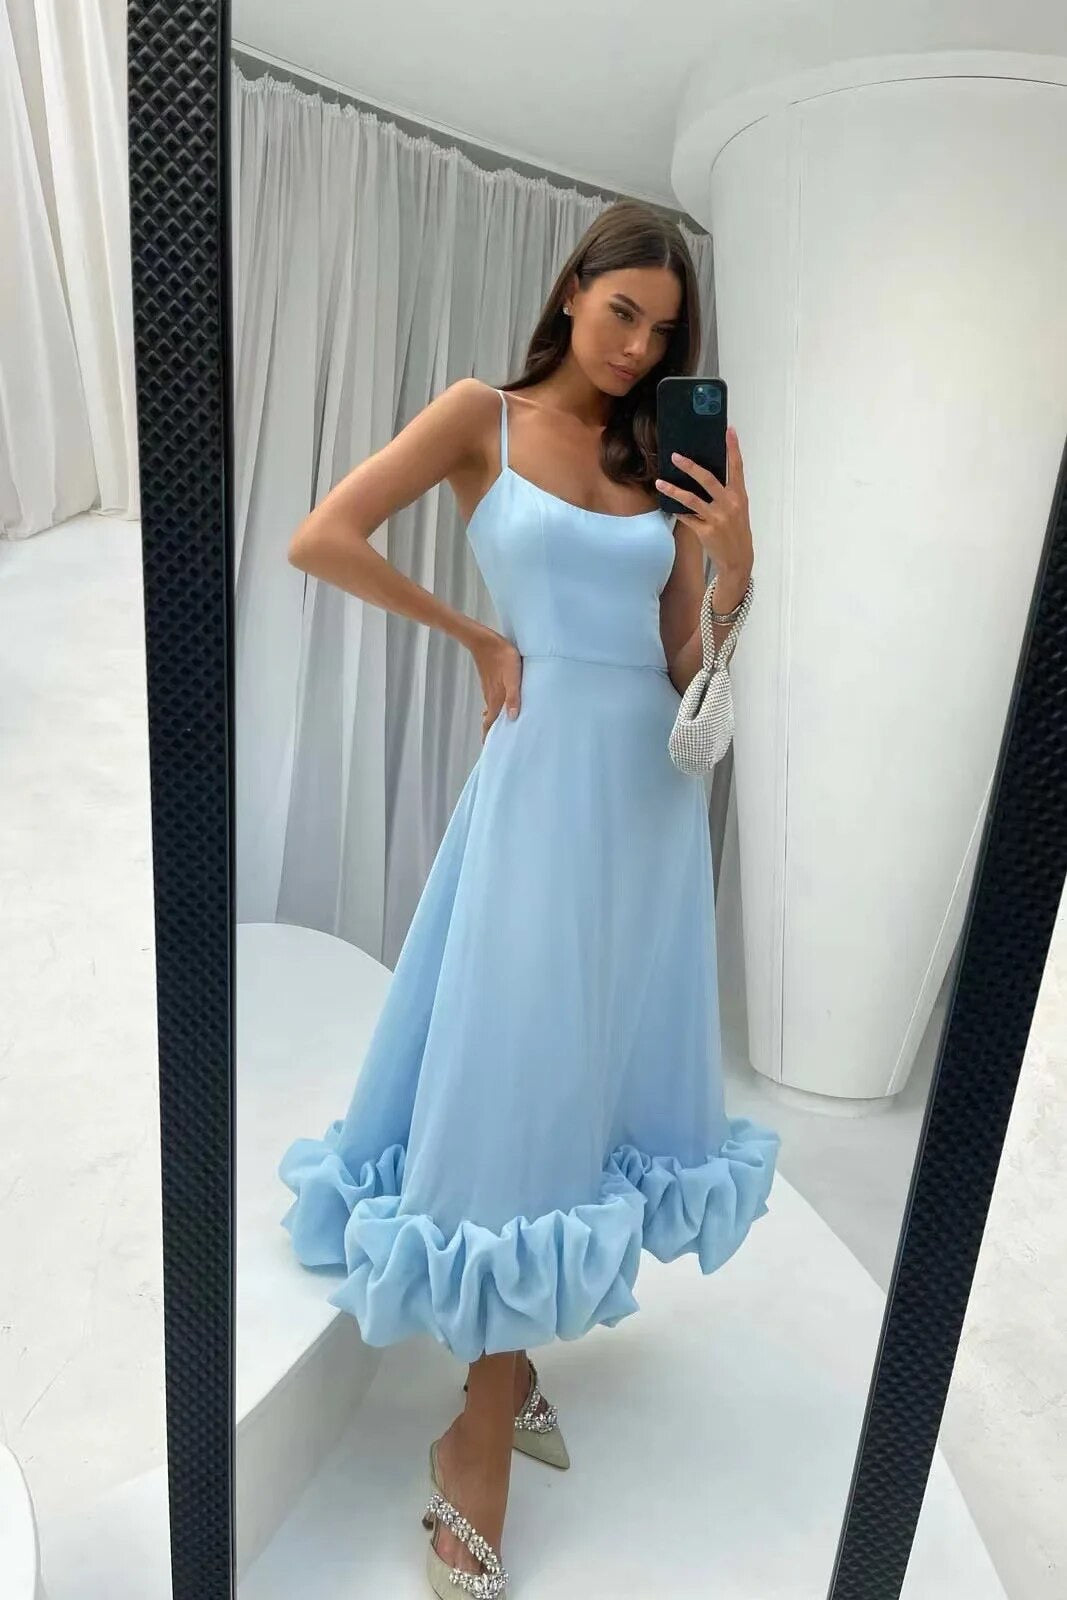 The Cloud Prom Dress